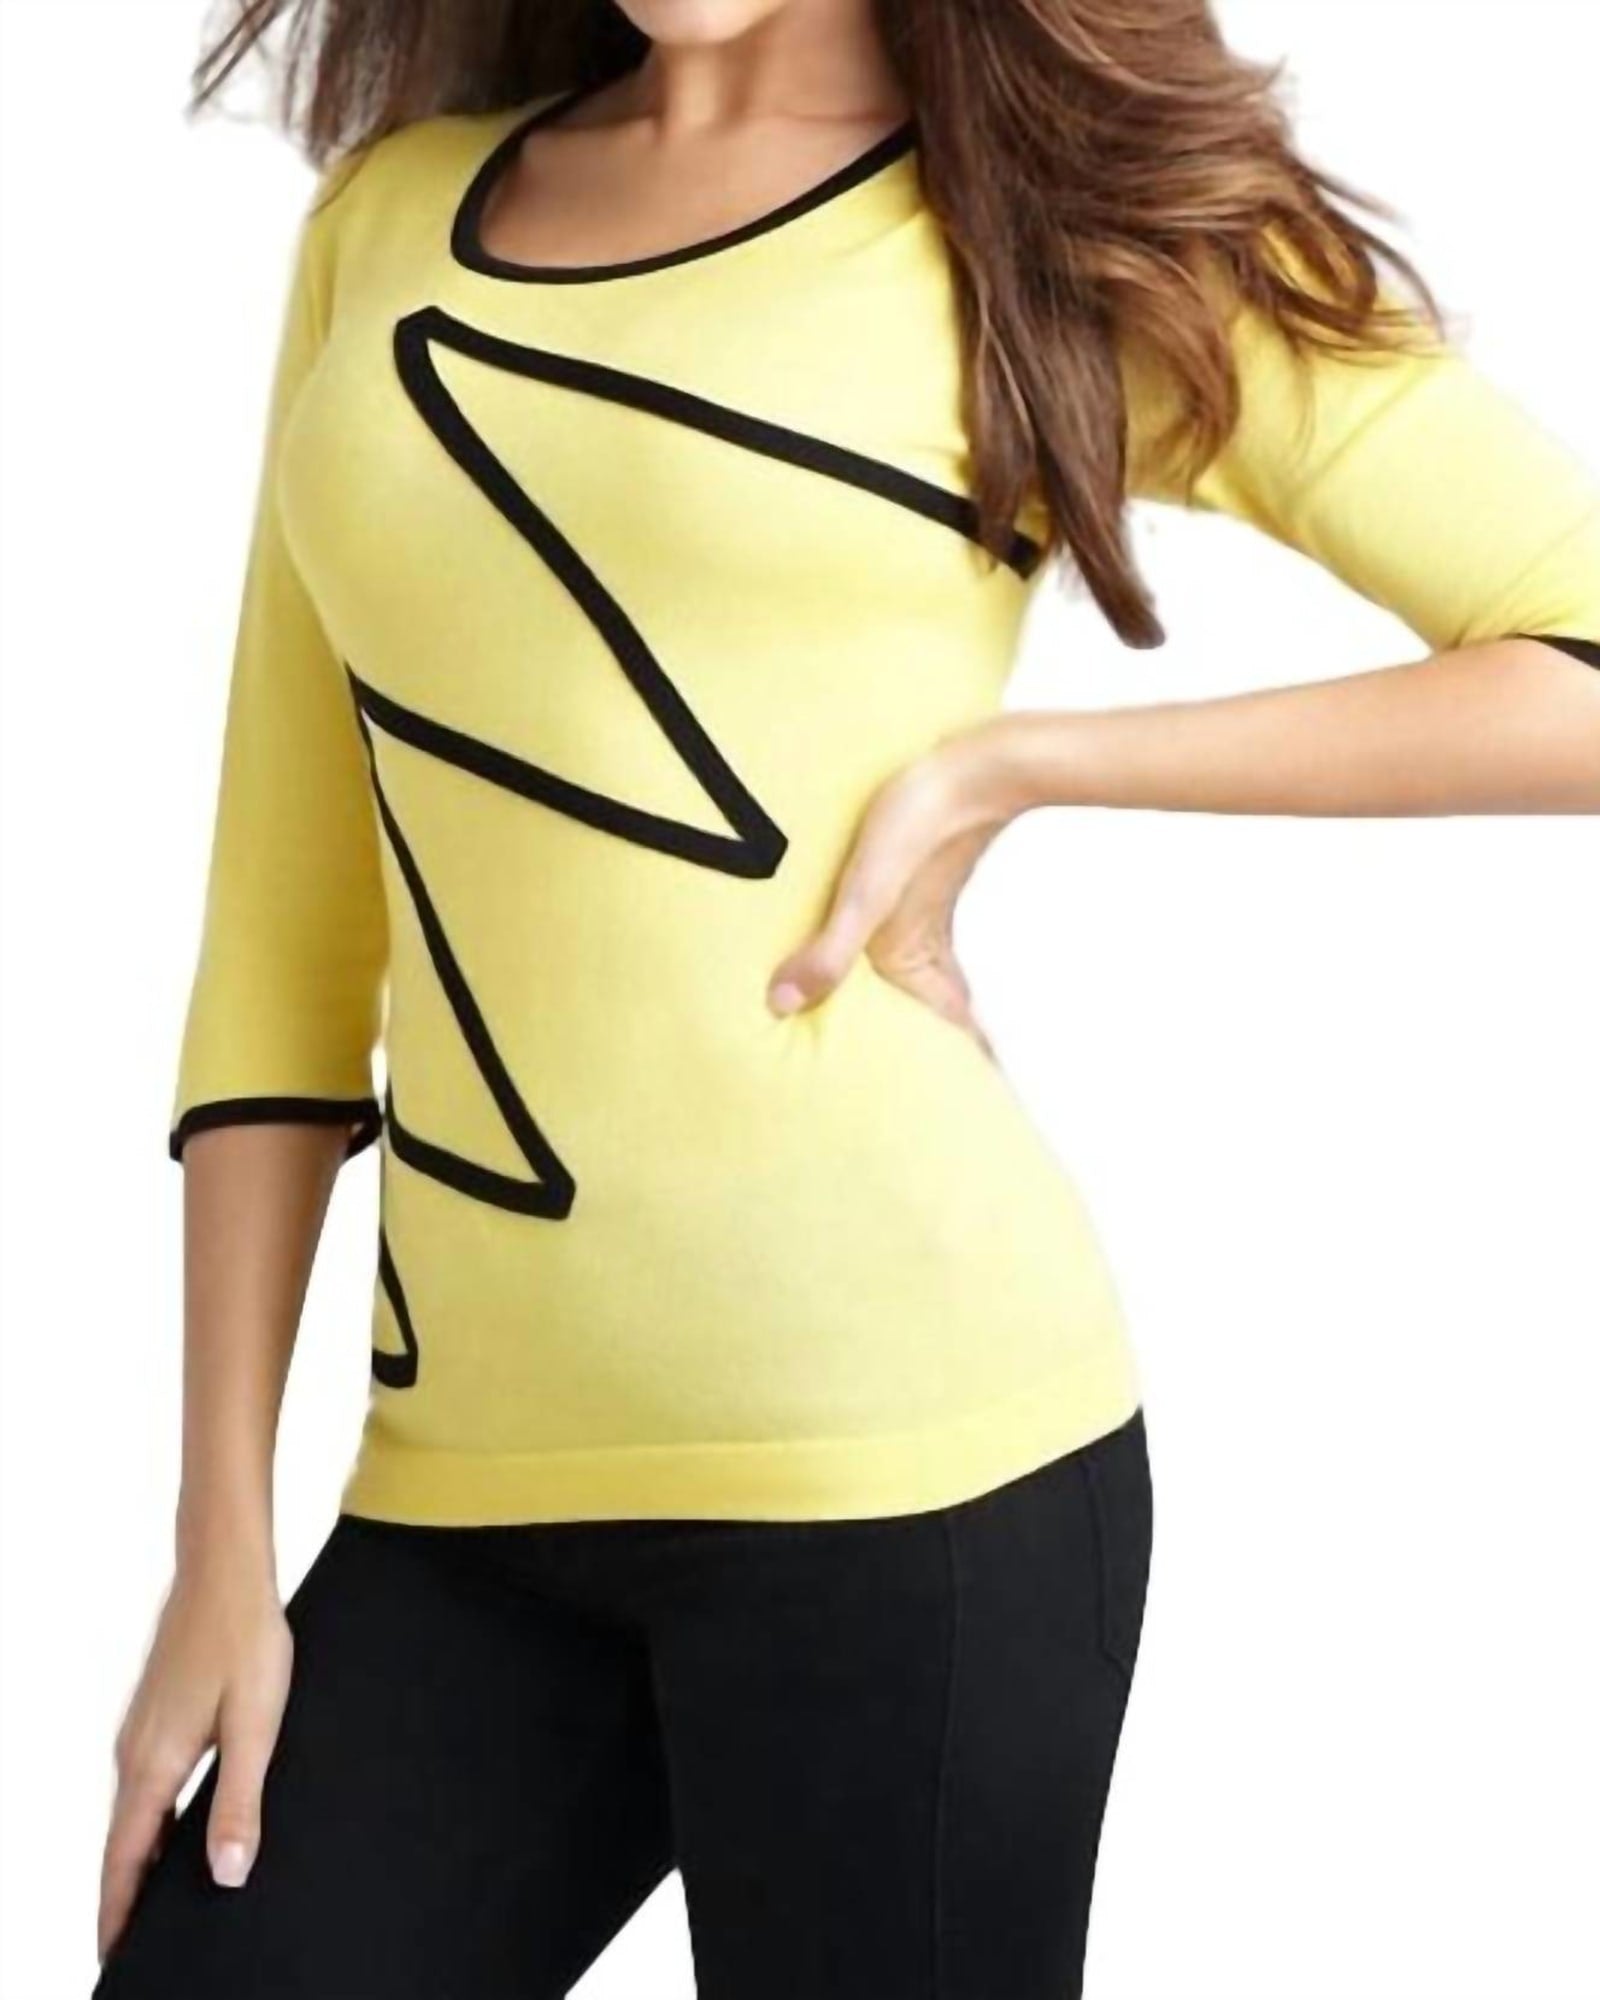 Zig Zag Sweater in Yellow/Black | Yellow/Black